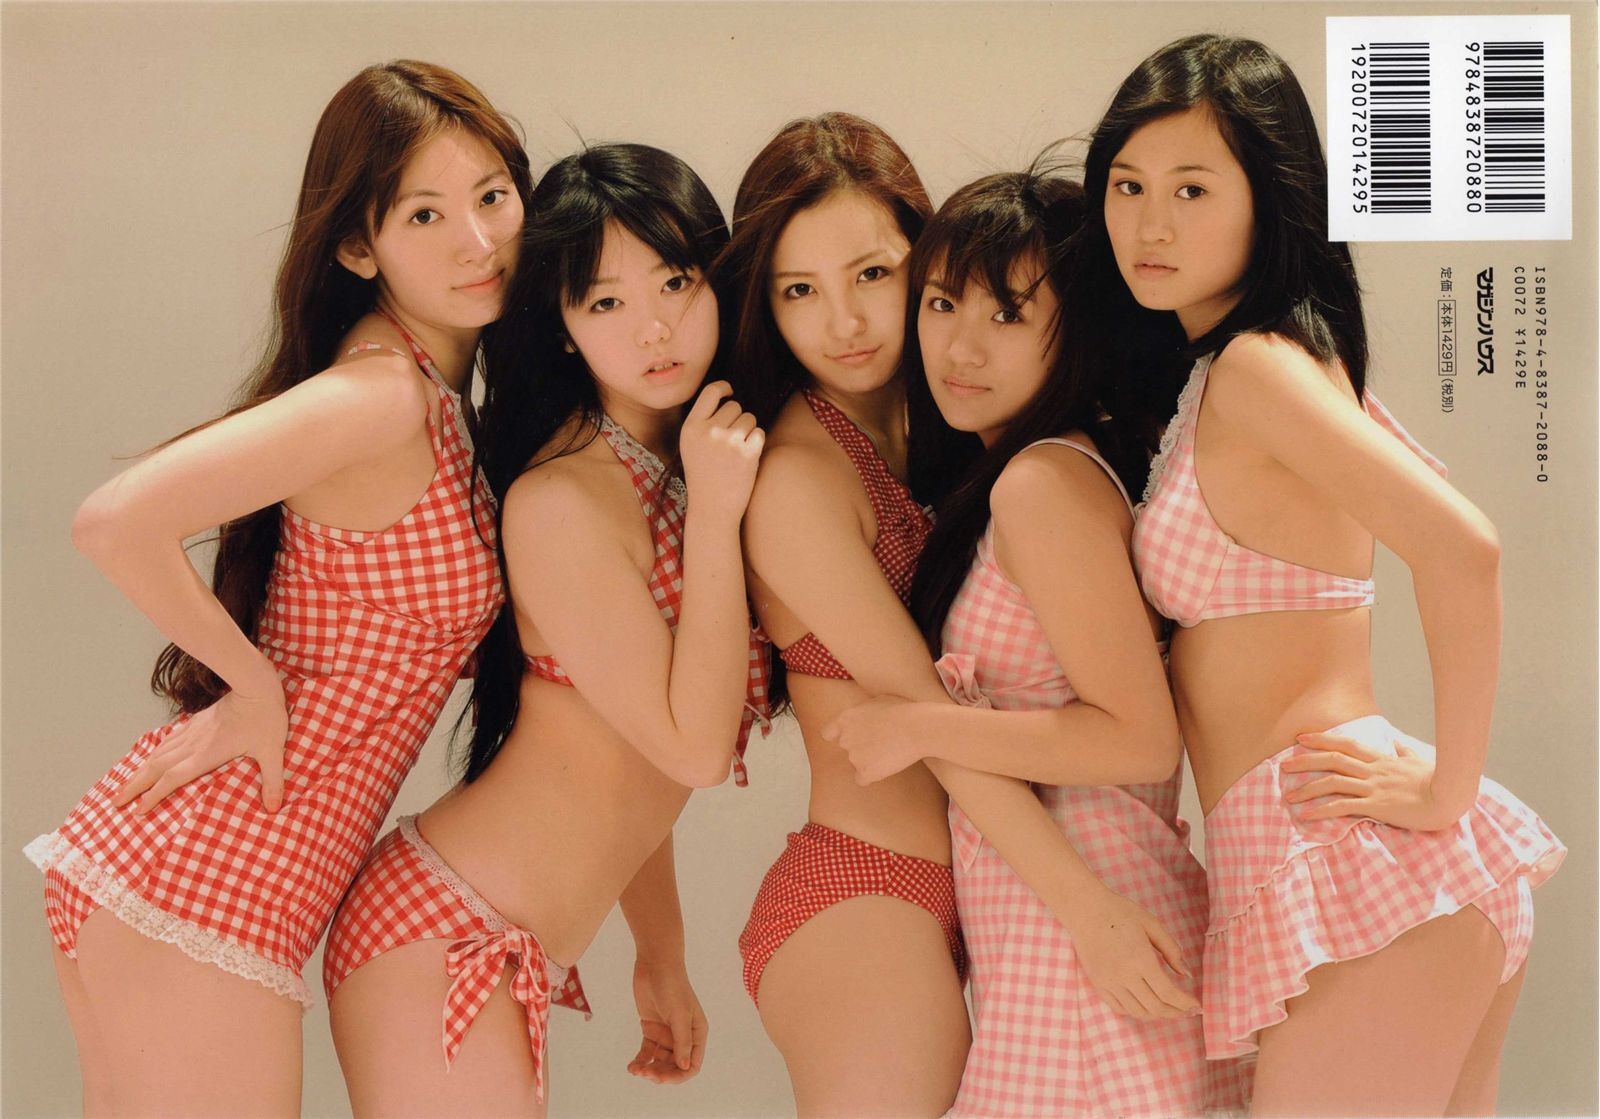 AKB48 women's group